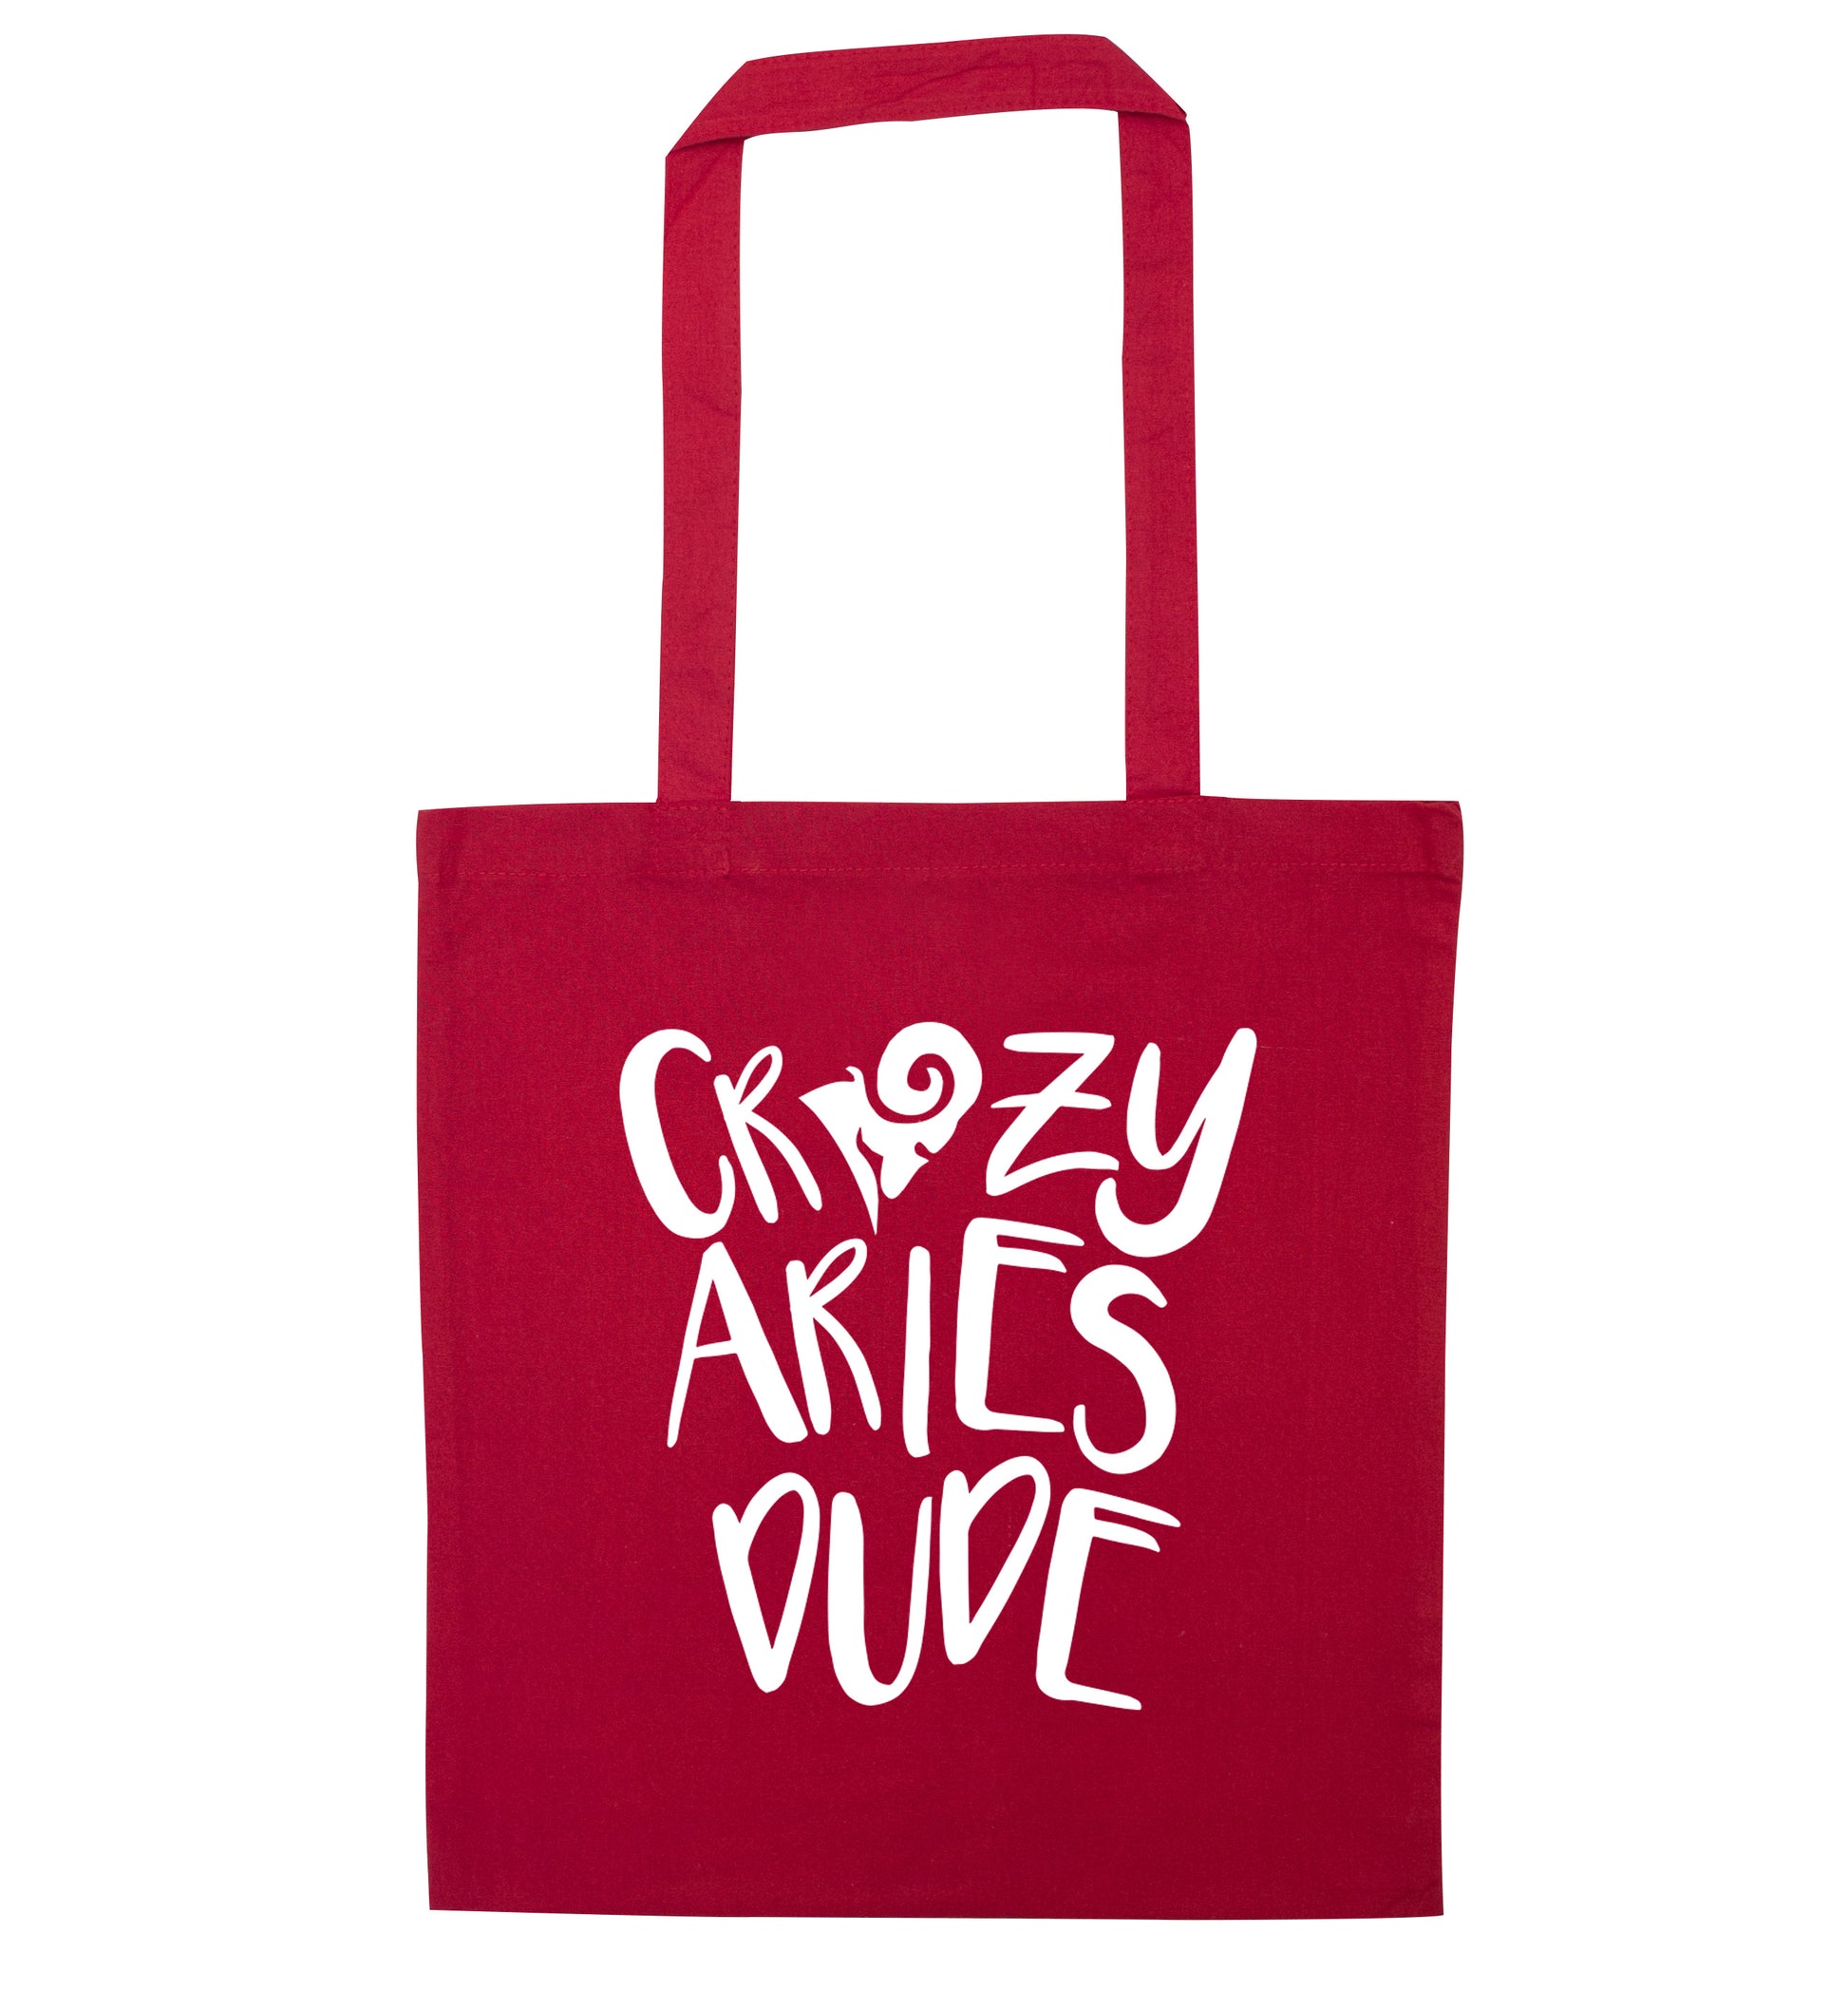 Crazy aries dude red tote bag